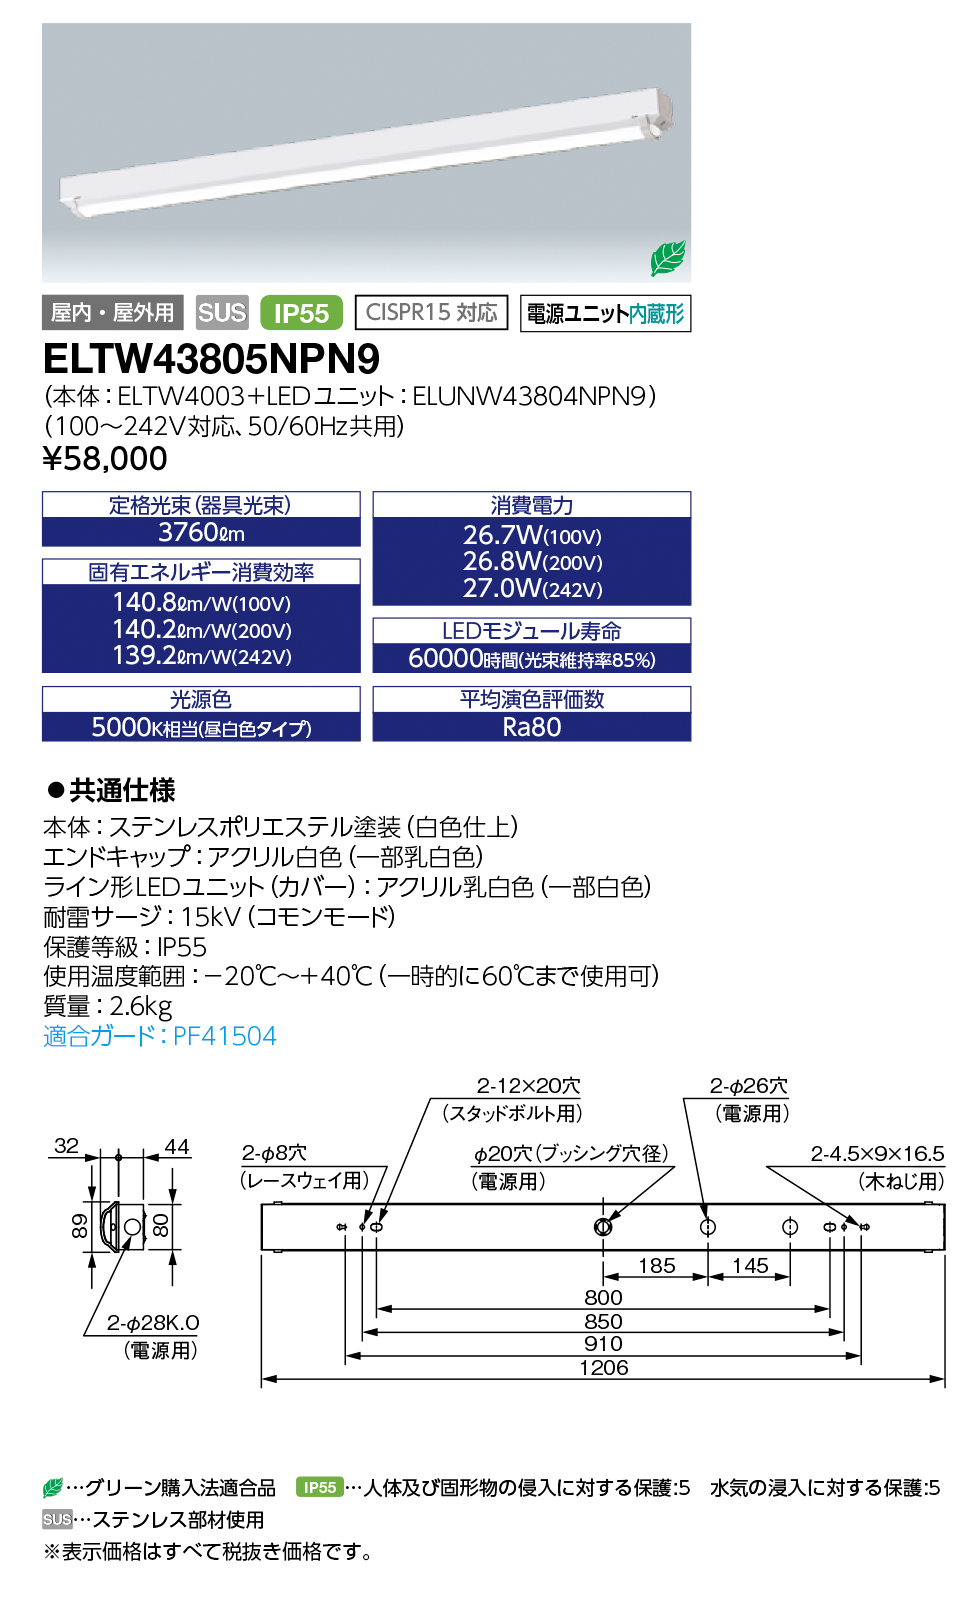 ELTW43805NPN9